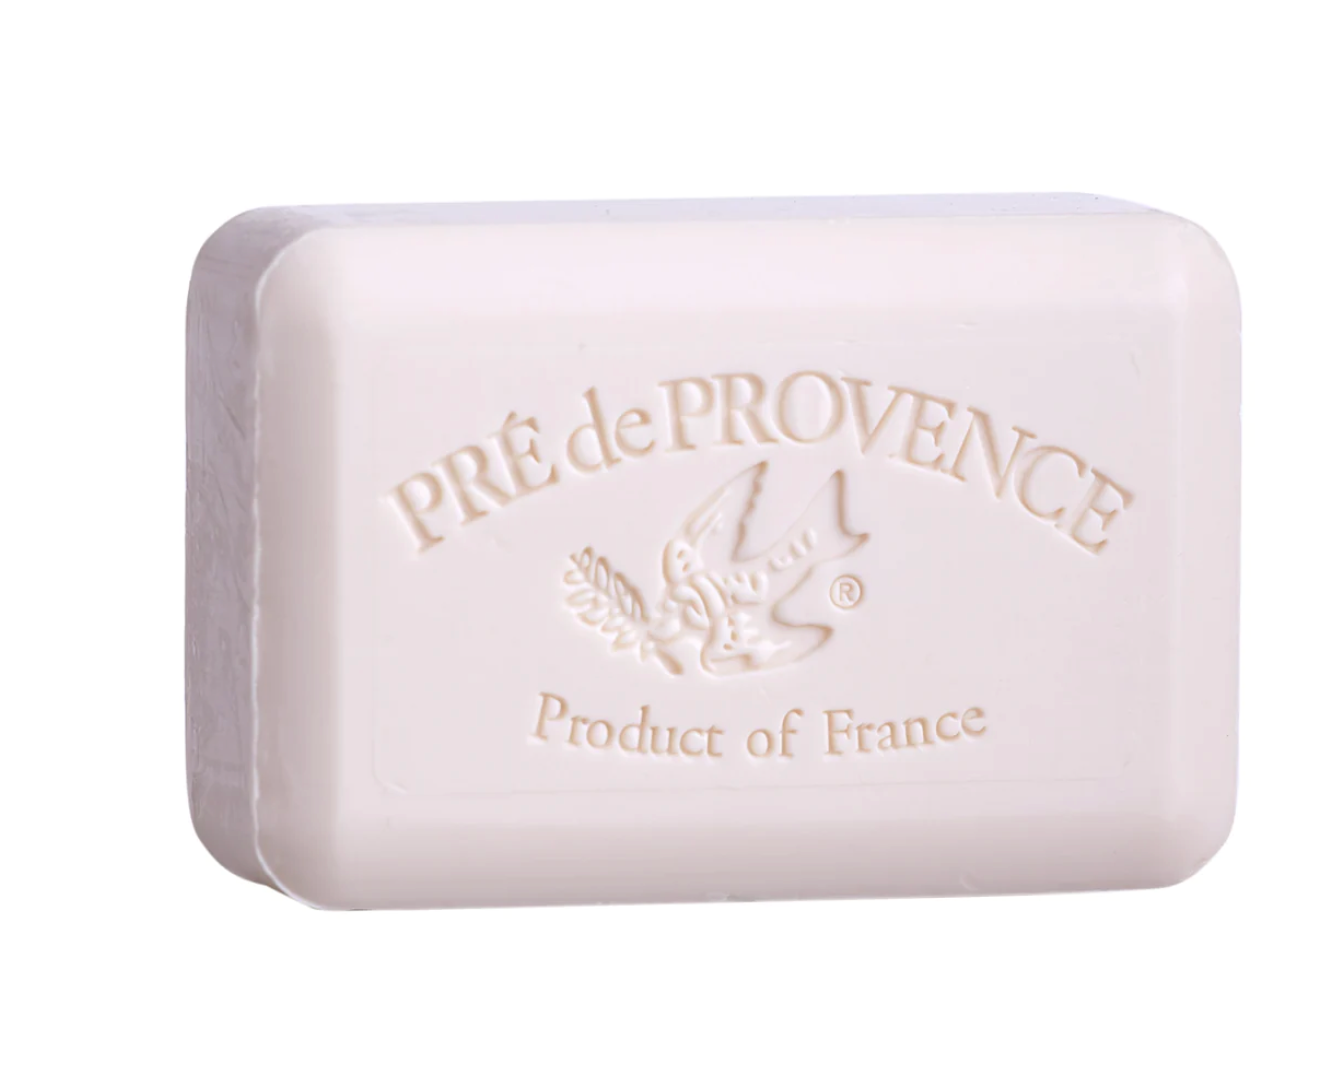 Spiced Balsam soap bar by Pré de Provence